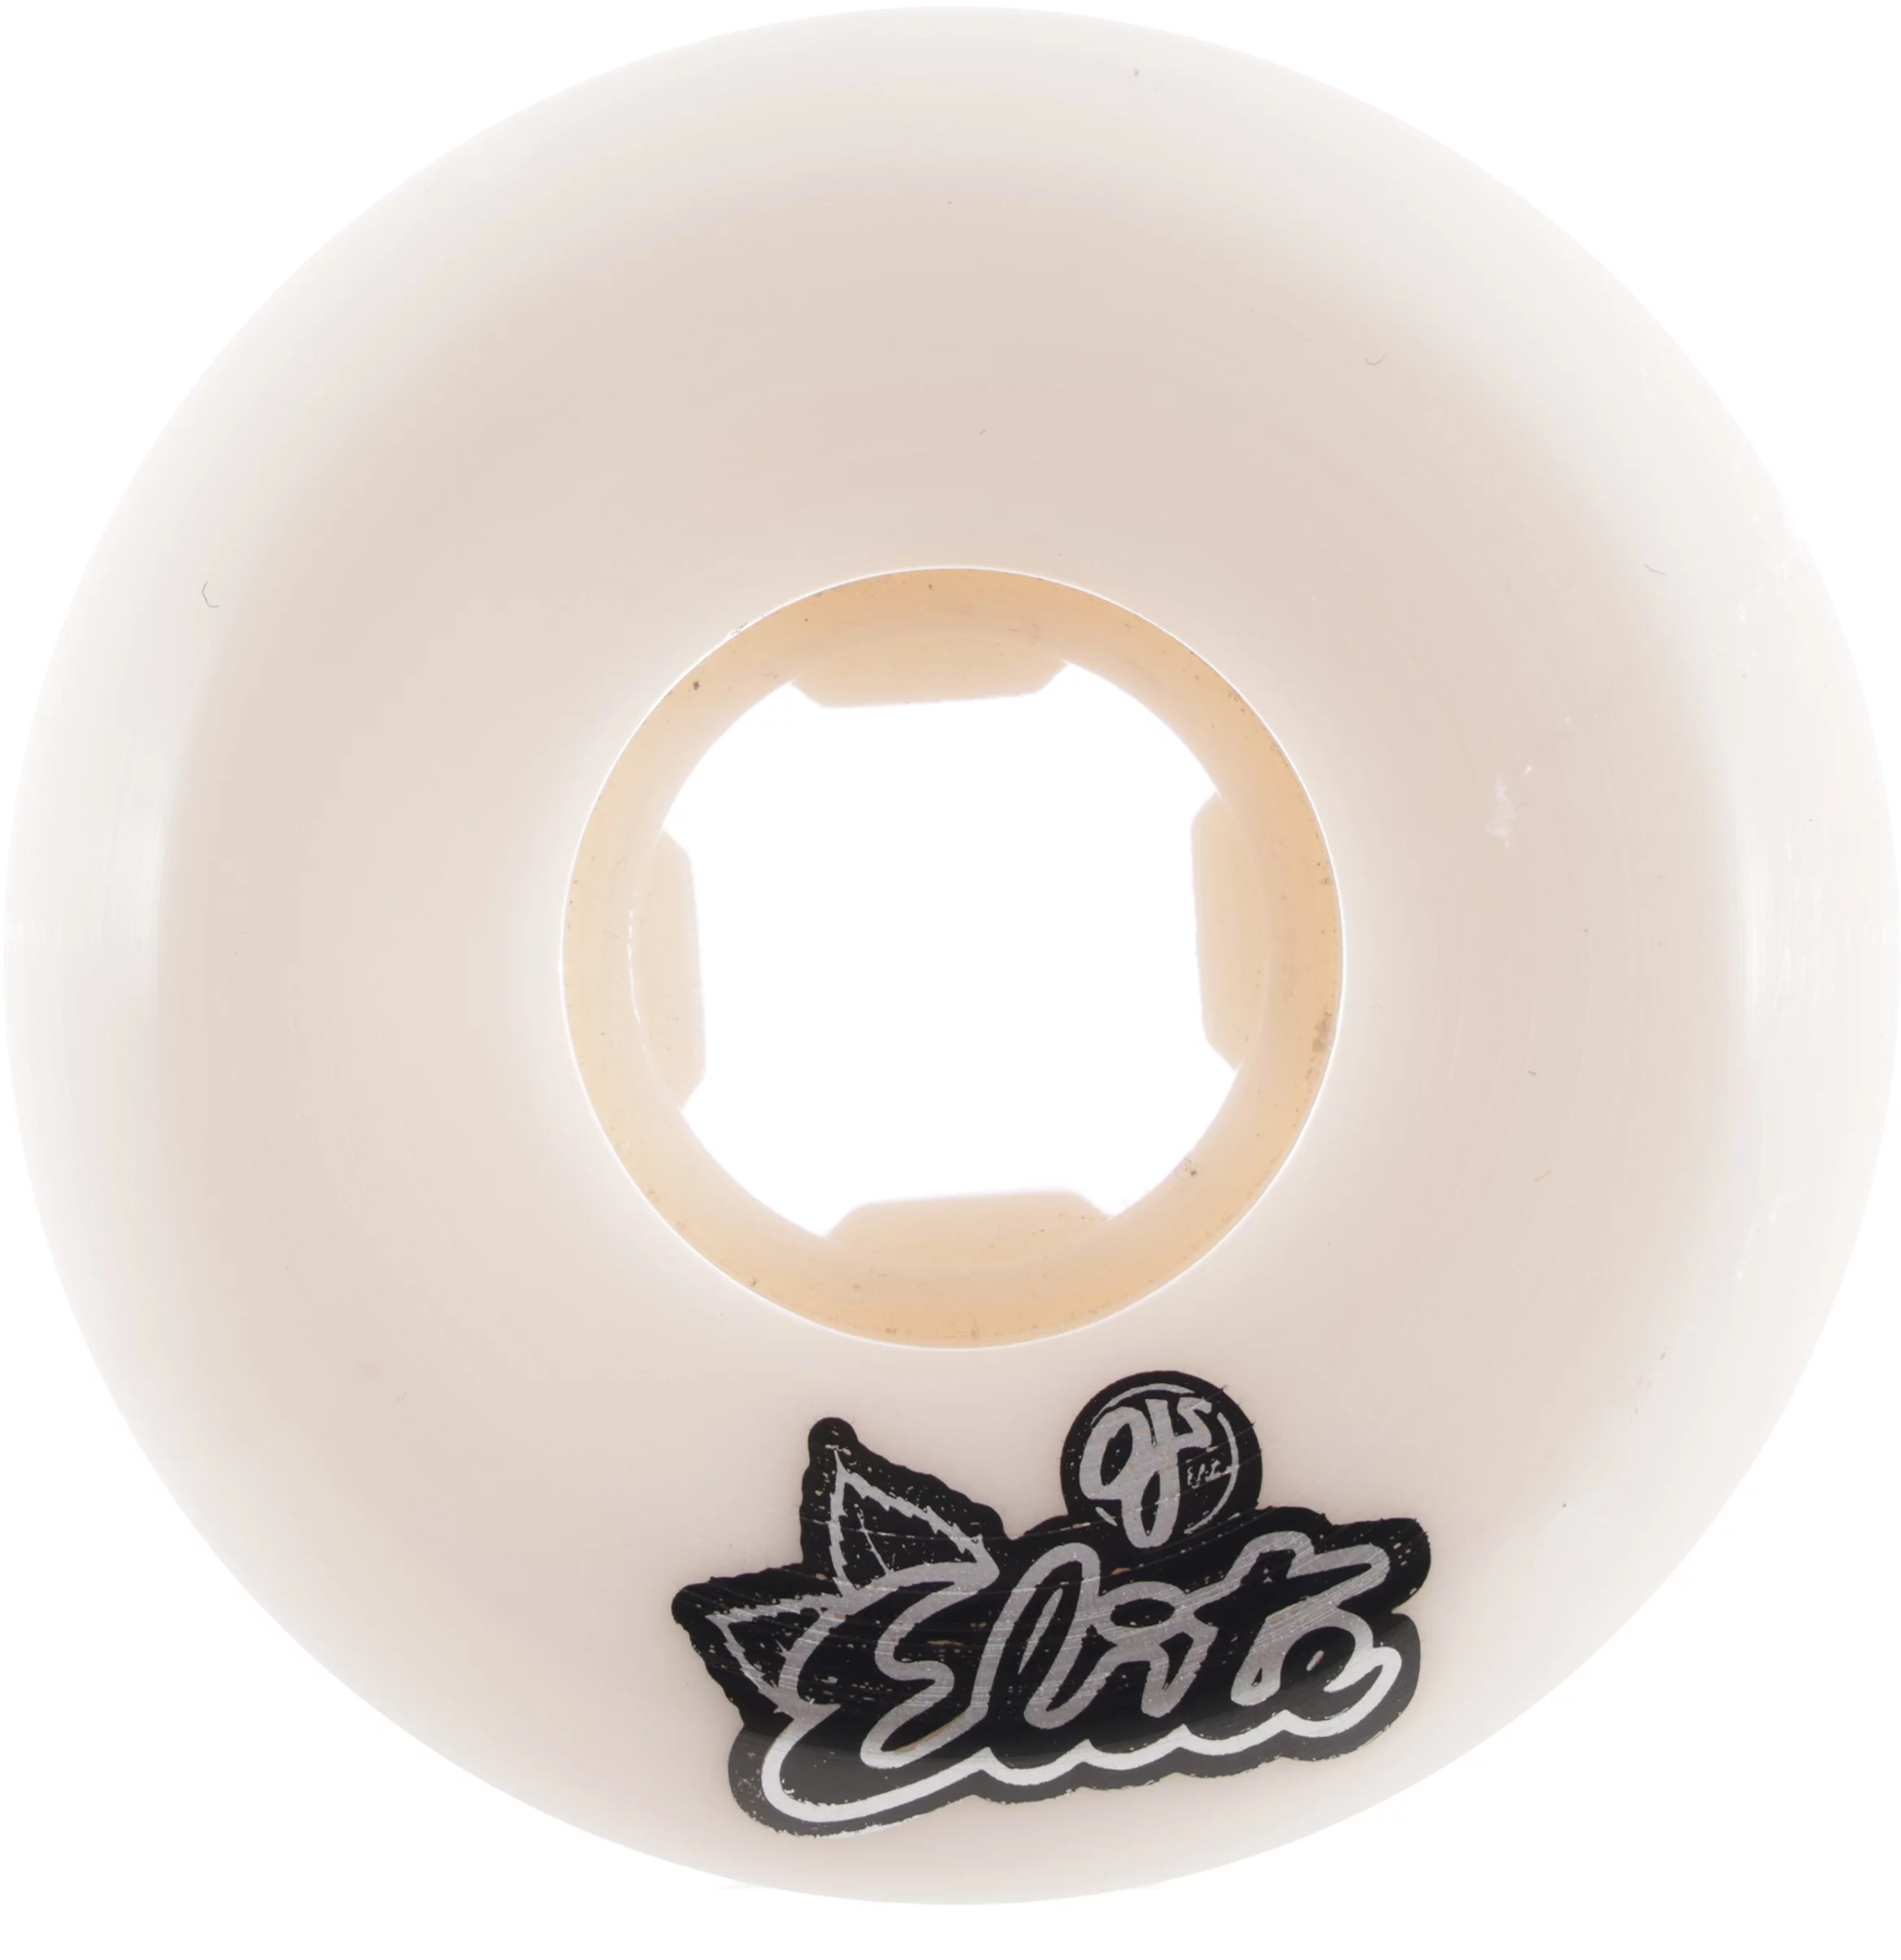 OJ Elite Nomads Skateboard Wheels - white (95a) | Tactics